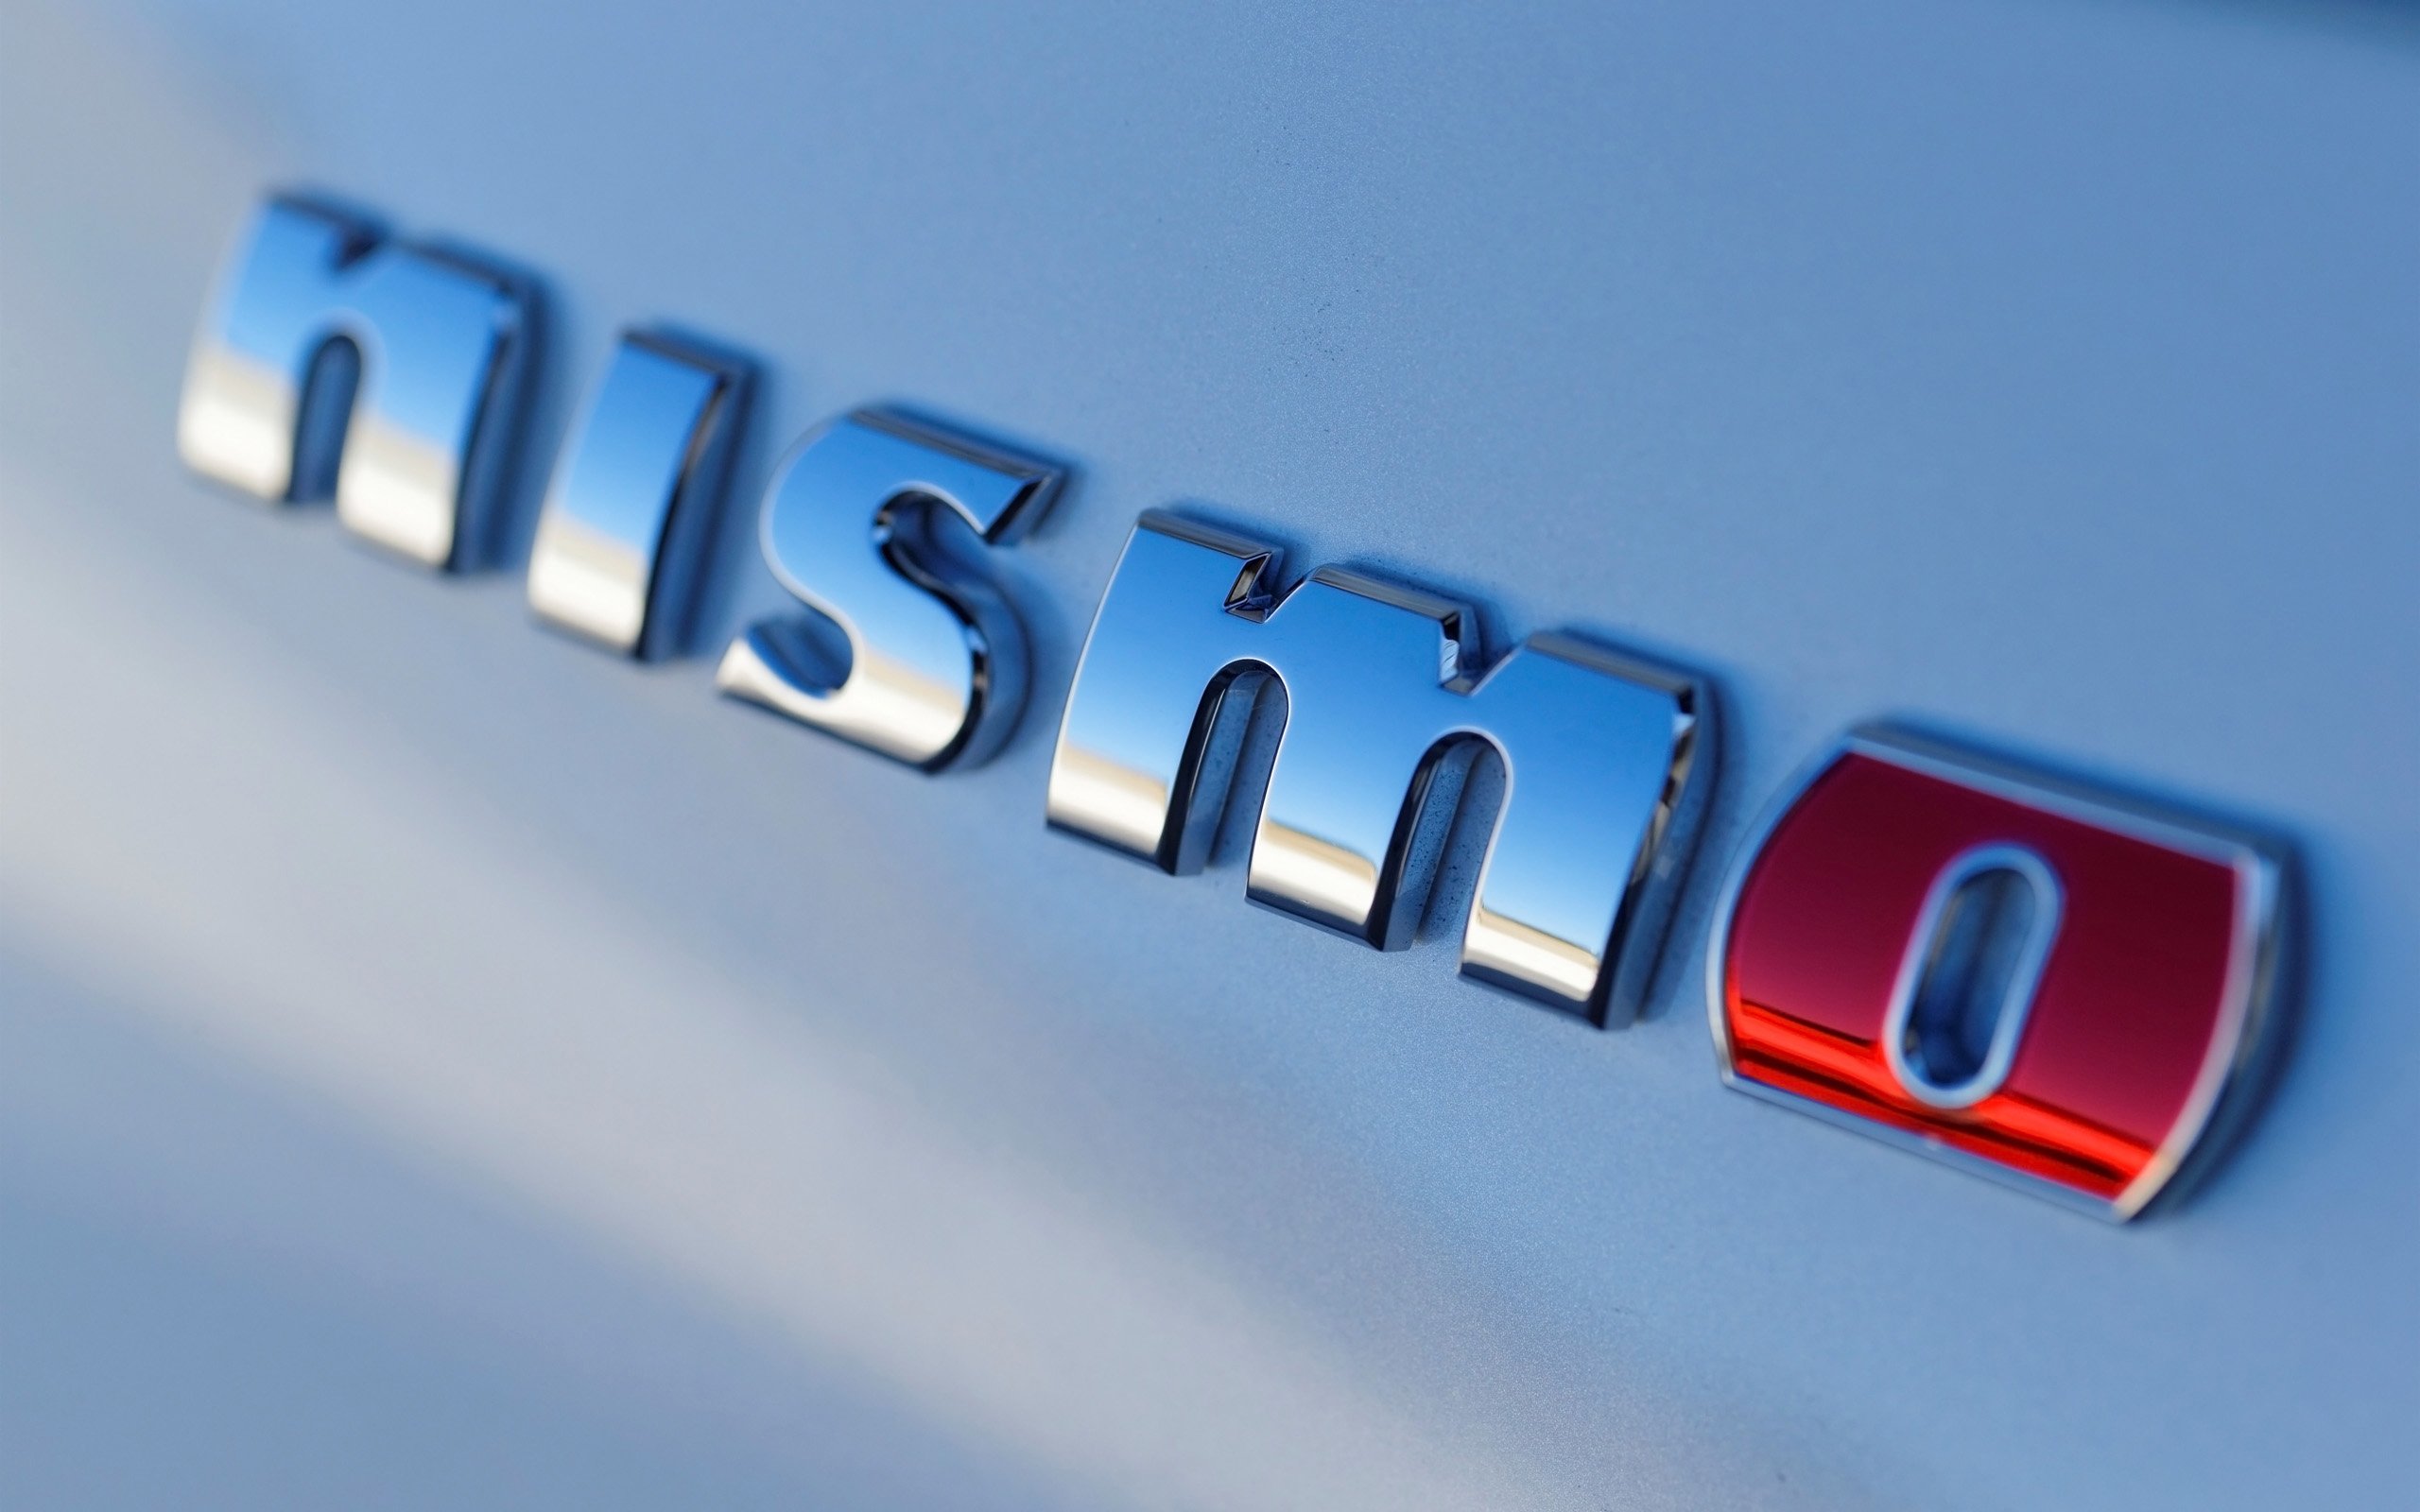 2014 Nissan 370Z Nismo tuning logo poster g wallpaper 2560x1600 2560x1600